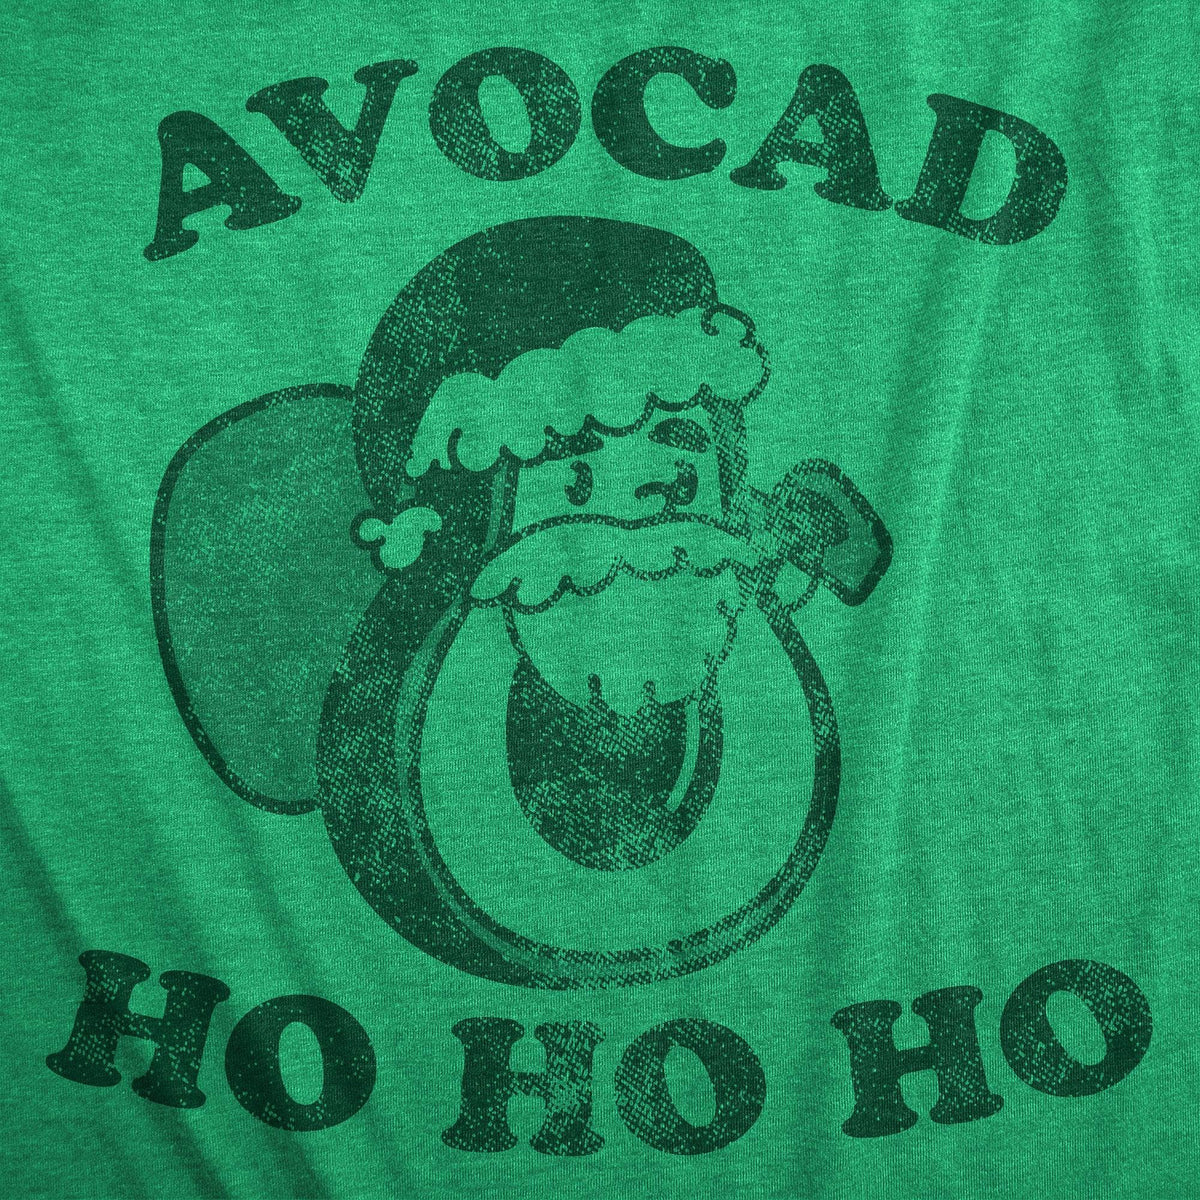 Avocad Ho Ho Ho Men&#39;s Tshirt  -  Crazy Dog T-Shirts